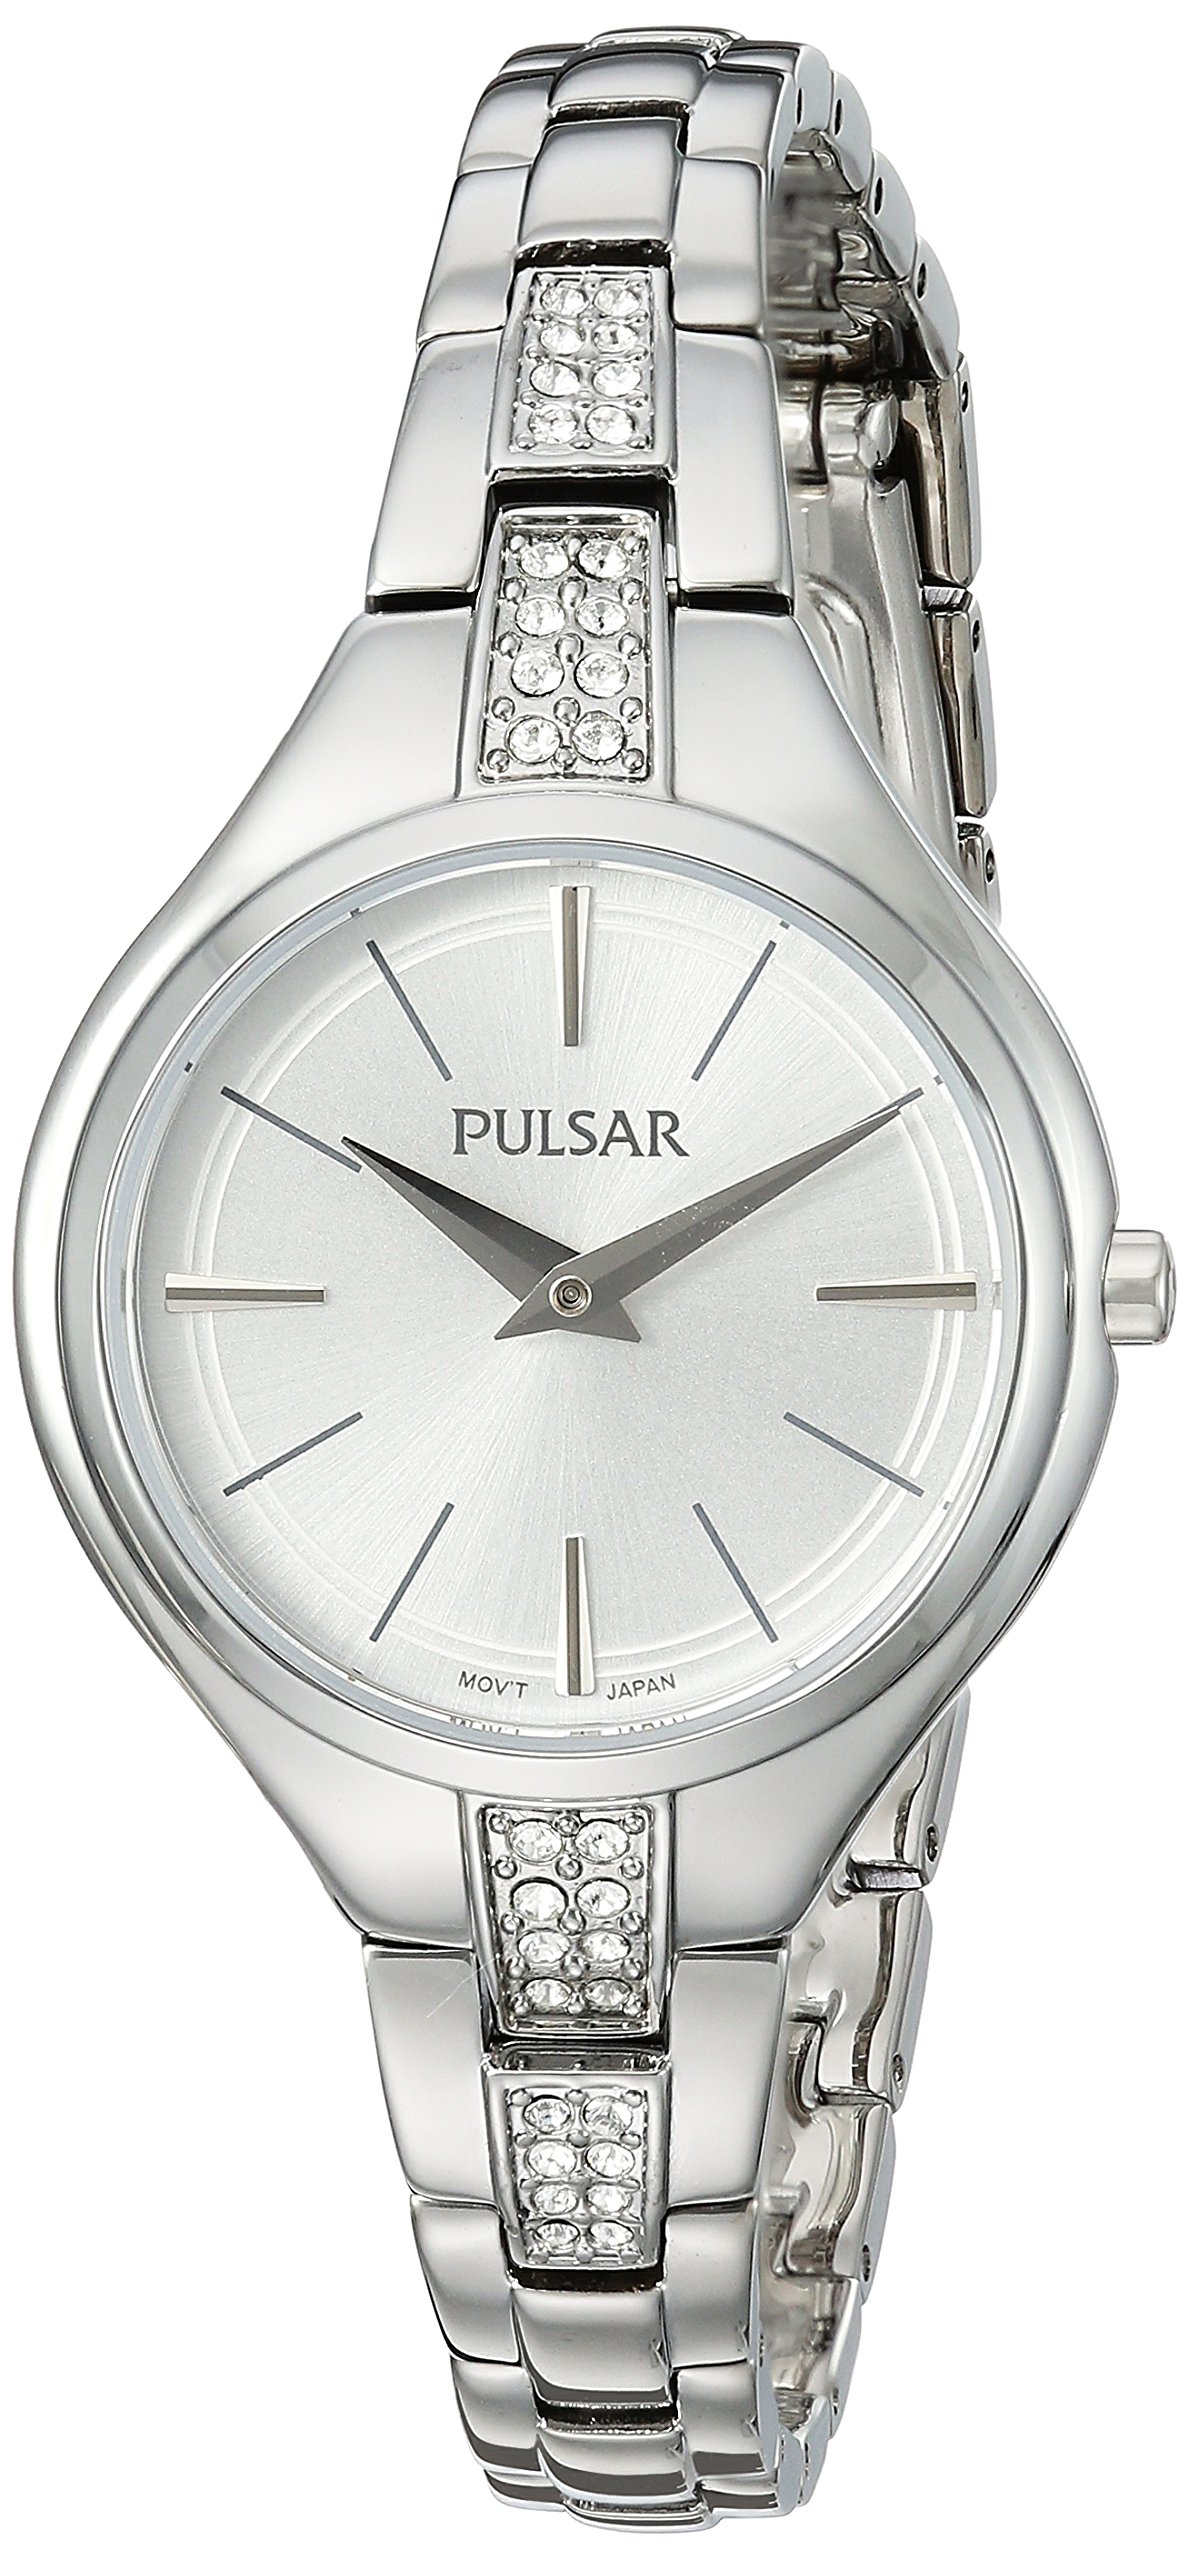 Pulsar Women's PM2239 Analog Display Analog Quartz Silver Watch